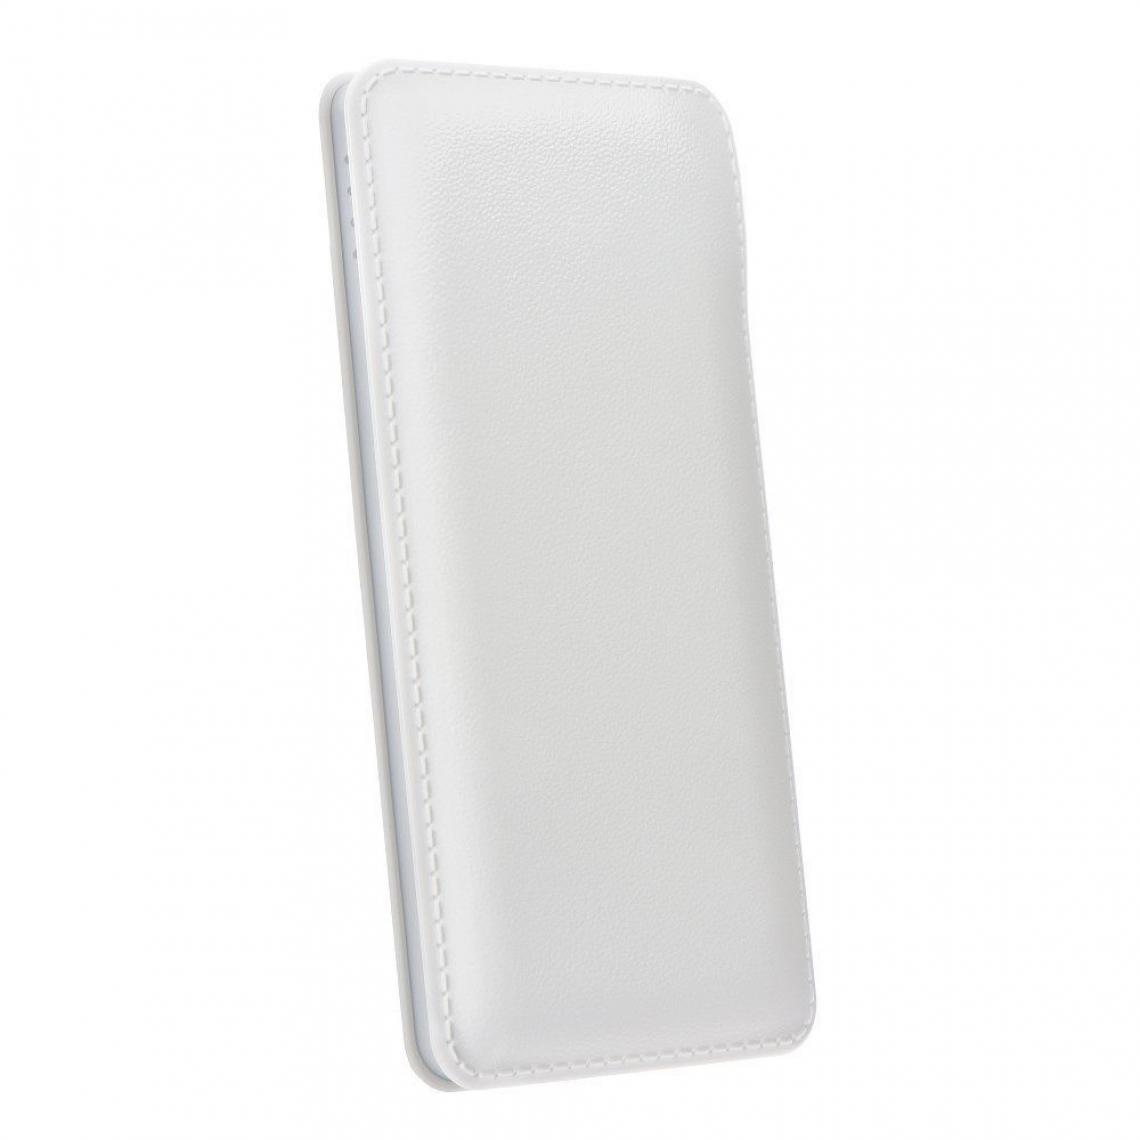 Ozzzo - Chargeur batterie externe 20000 mAh powerbank ozzzo blanc pour SONY Xperia XZ2 Premium - Autres accessoires smartphone